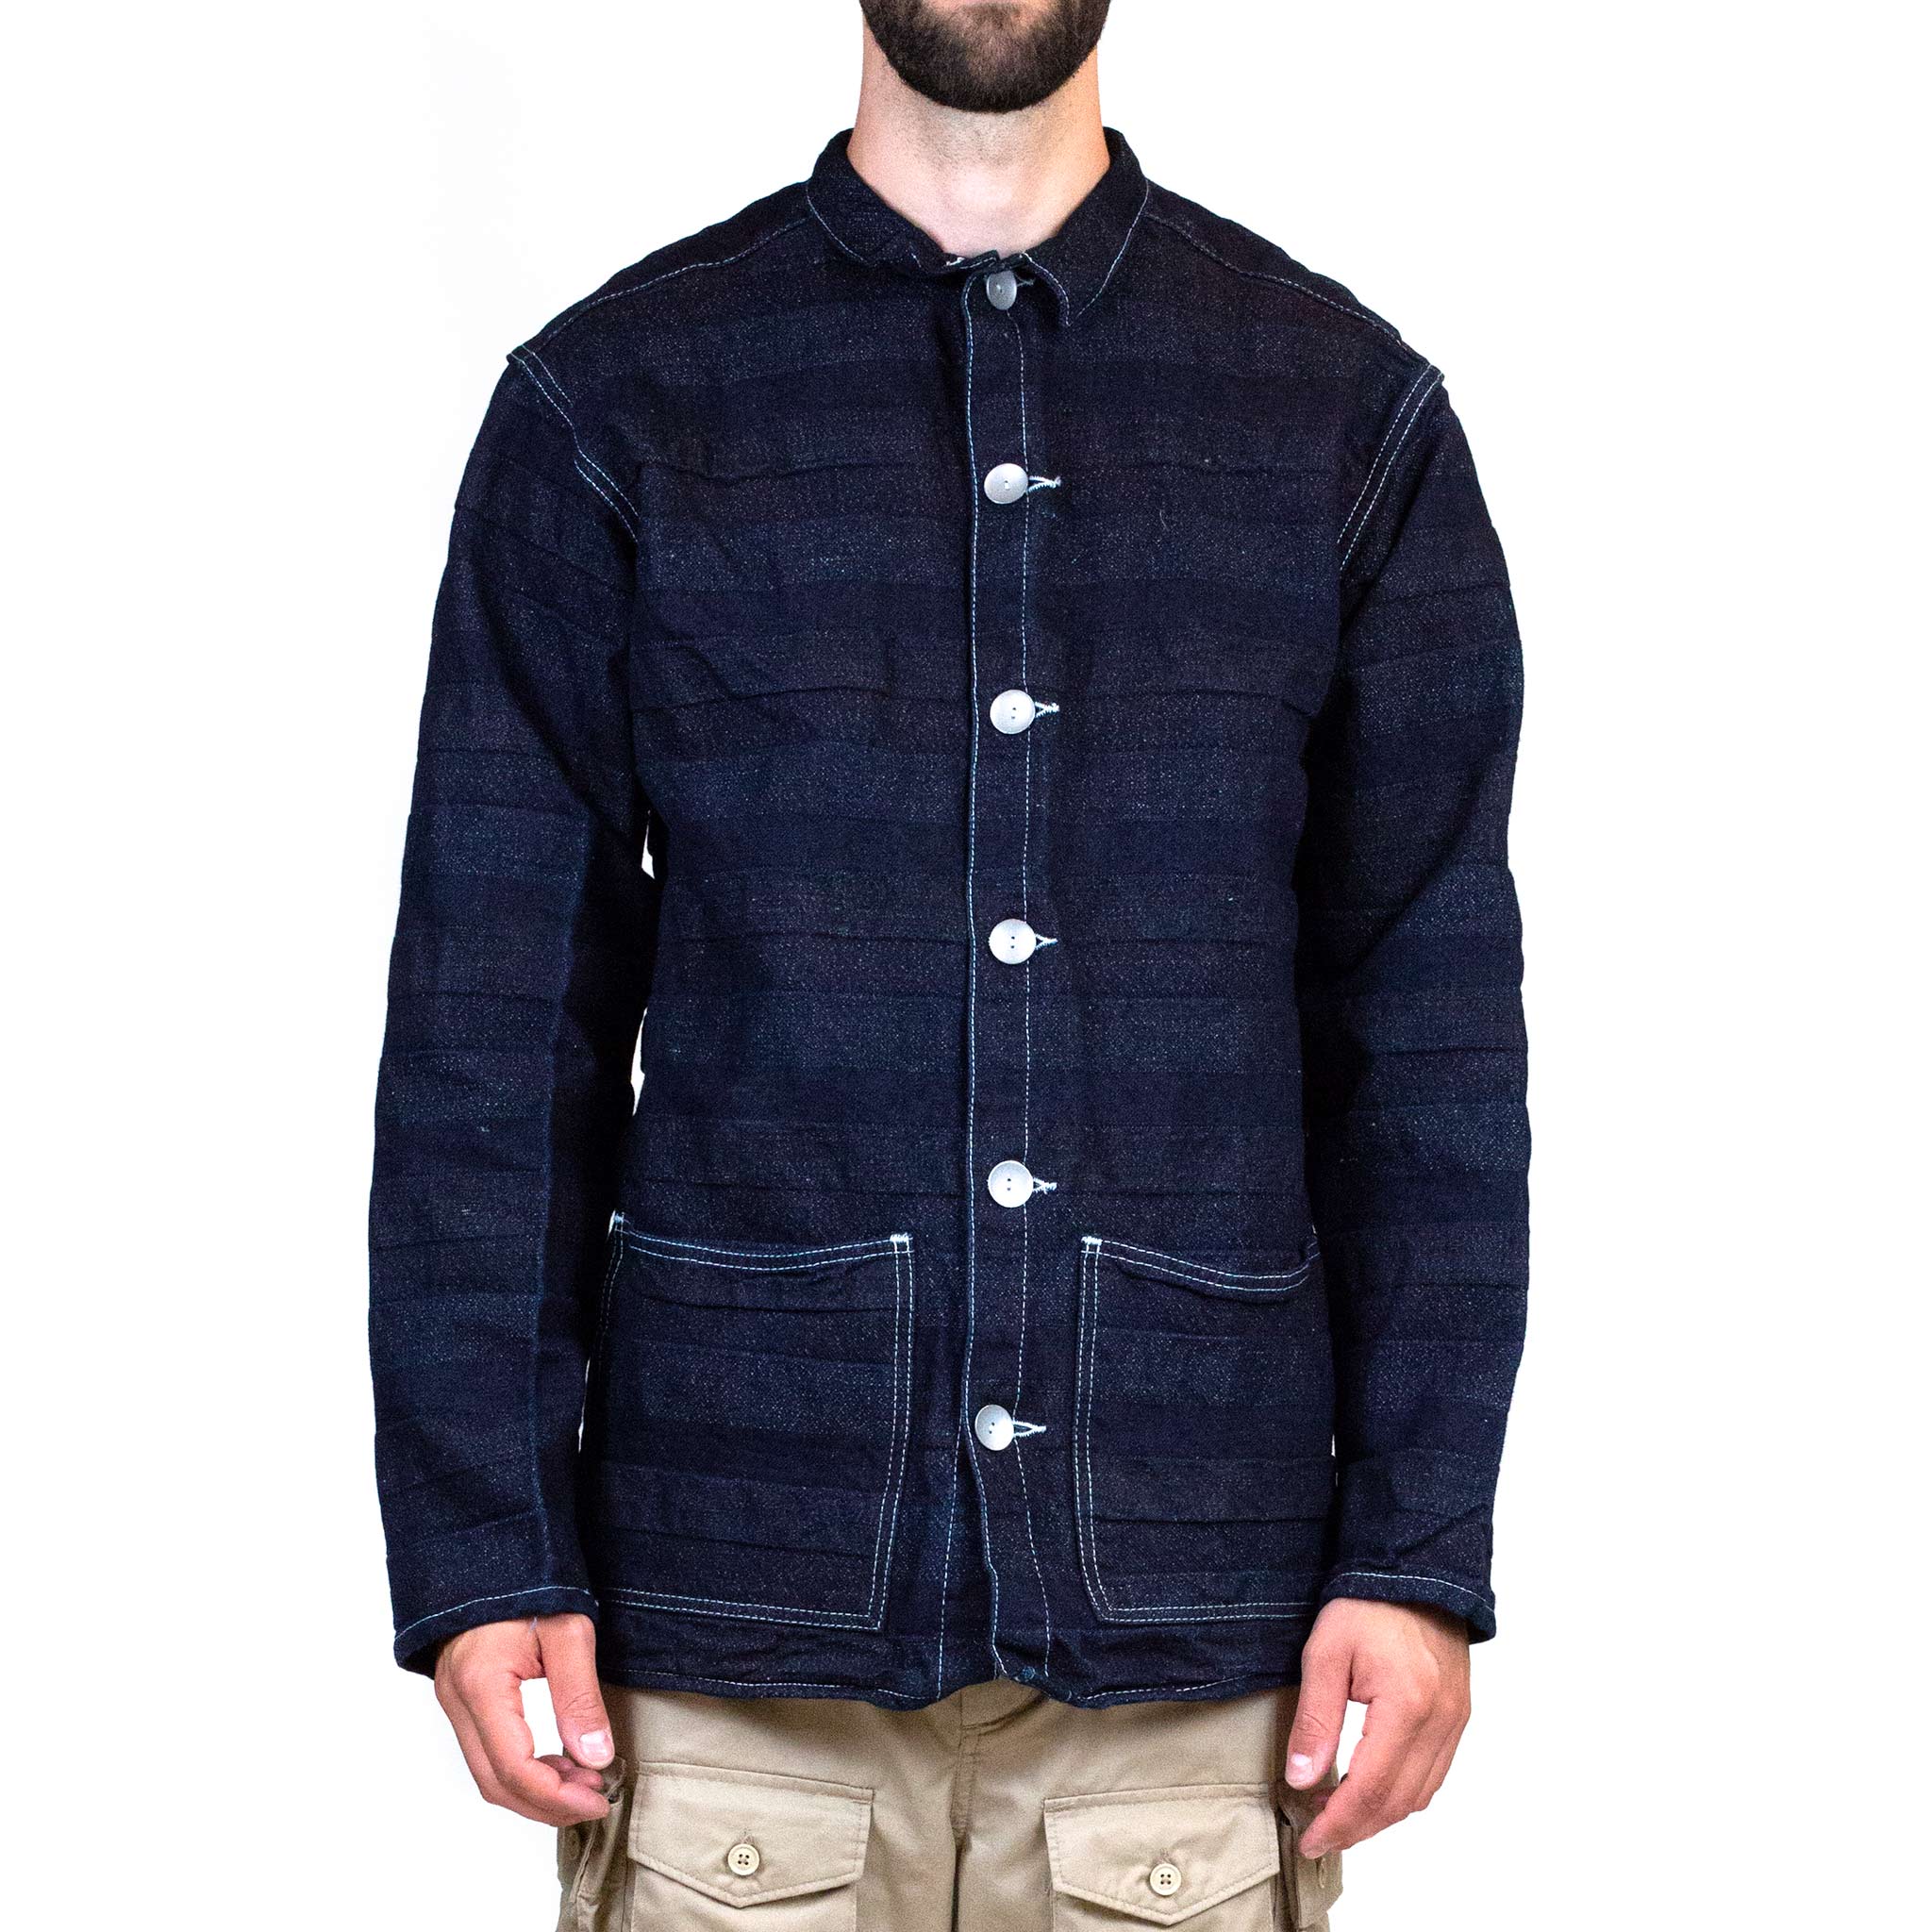 Tender 490 Floor Shirt Double Indigo & Linen Weaver's Blanket Stripe Rinse Washed Blue